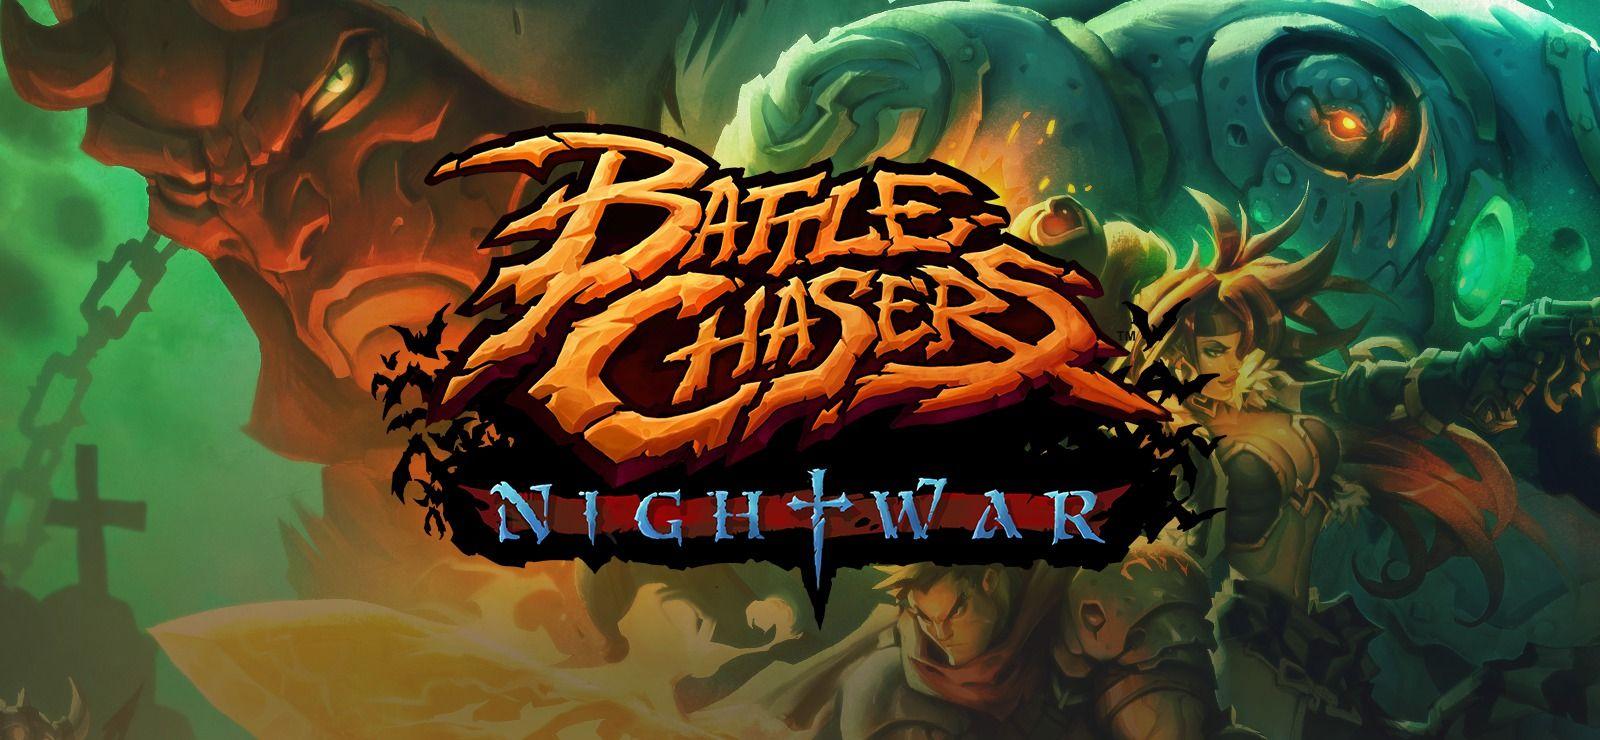 Battle Chasers: Nightwar on GOG.com